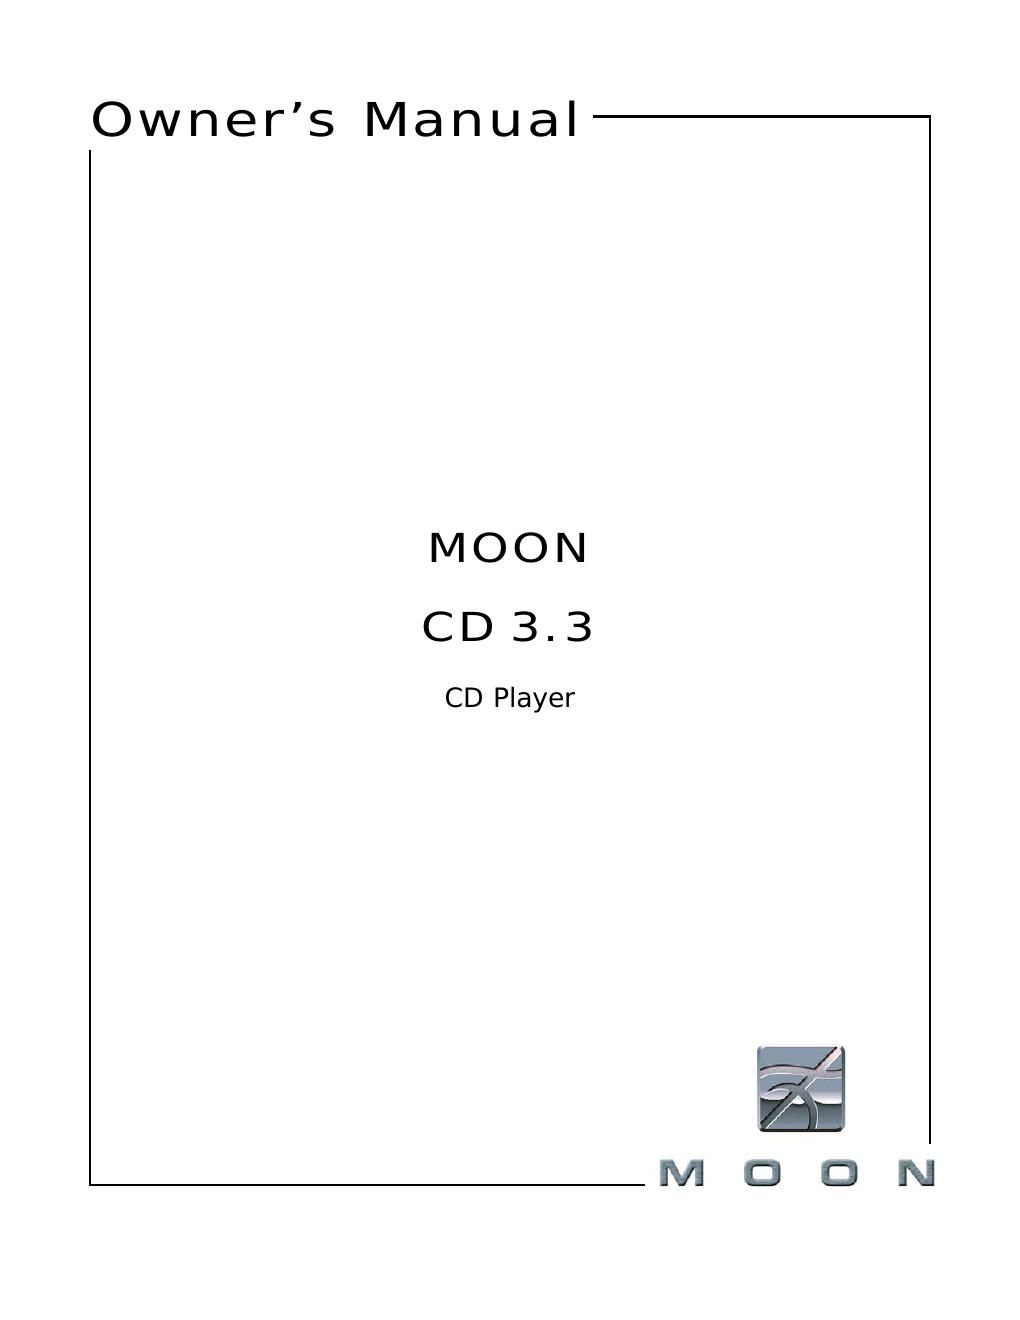 moon cd 3 3 owners manual